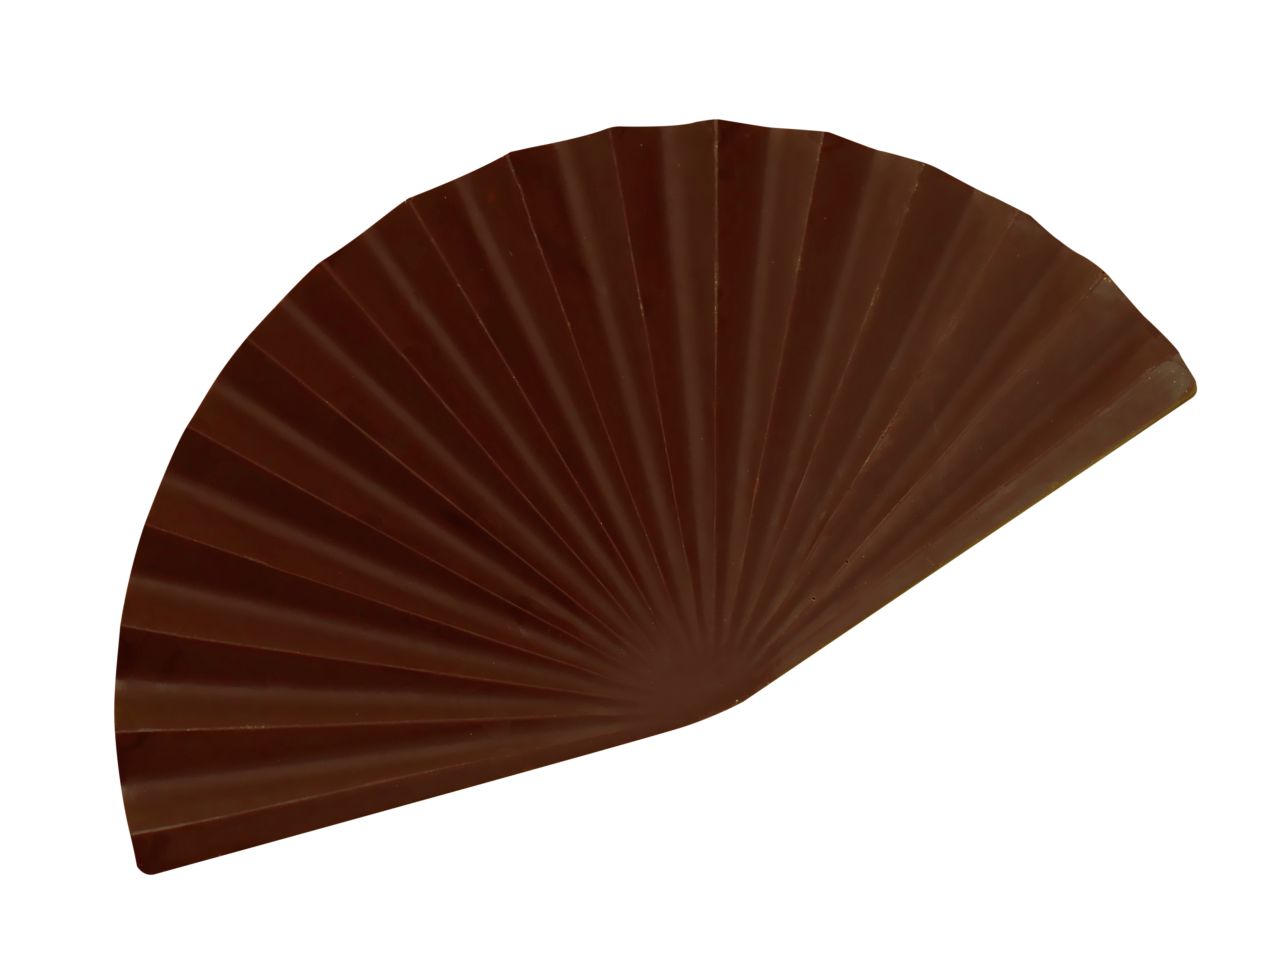 Schokoladen-Gießform: Aufleger Shells, Silikon, Cremeweiß, 5 Mulden à 8 x 4,2 cm